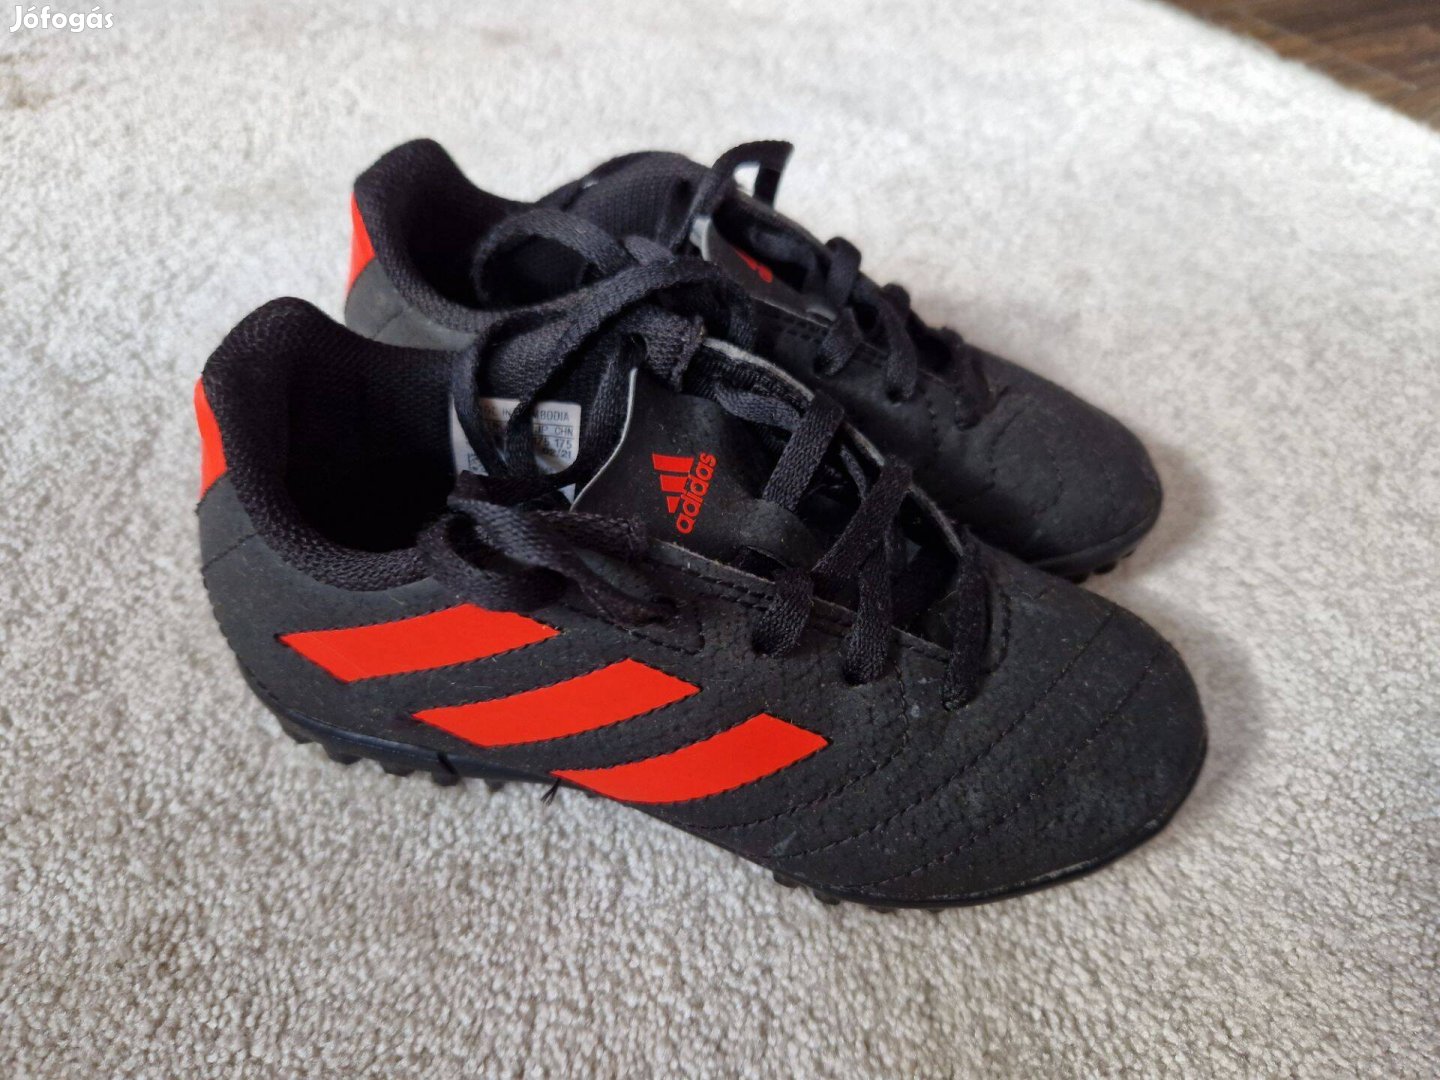 Adidas foci cipő, 29-es méret